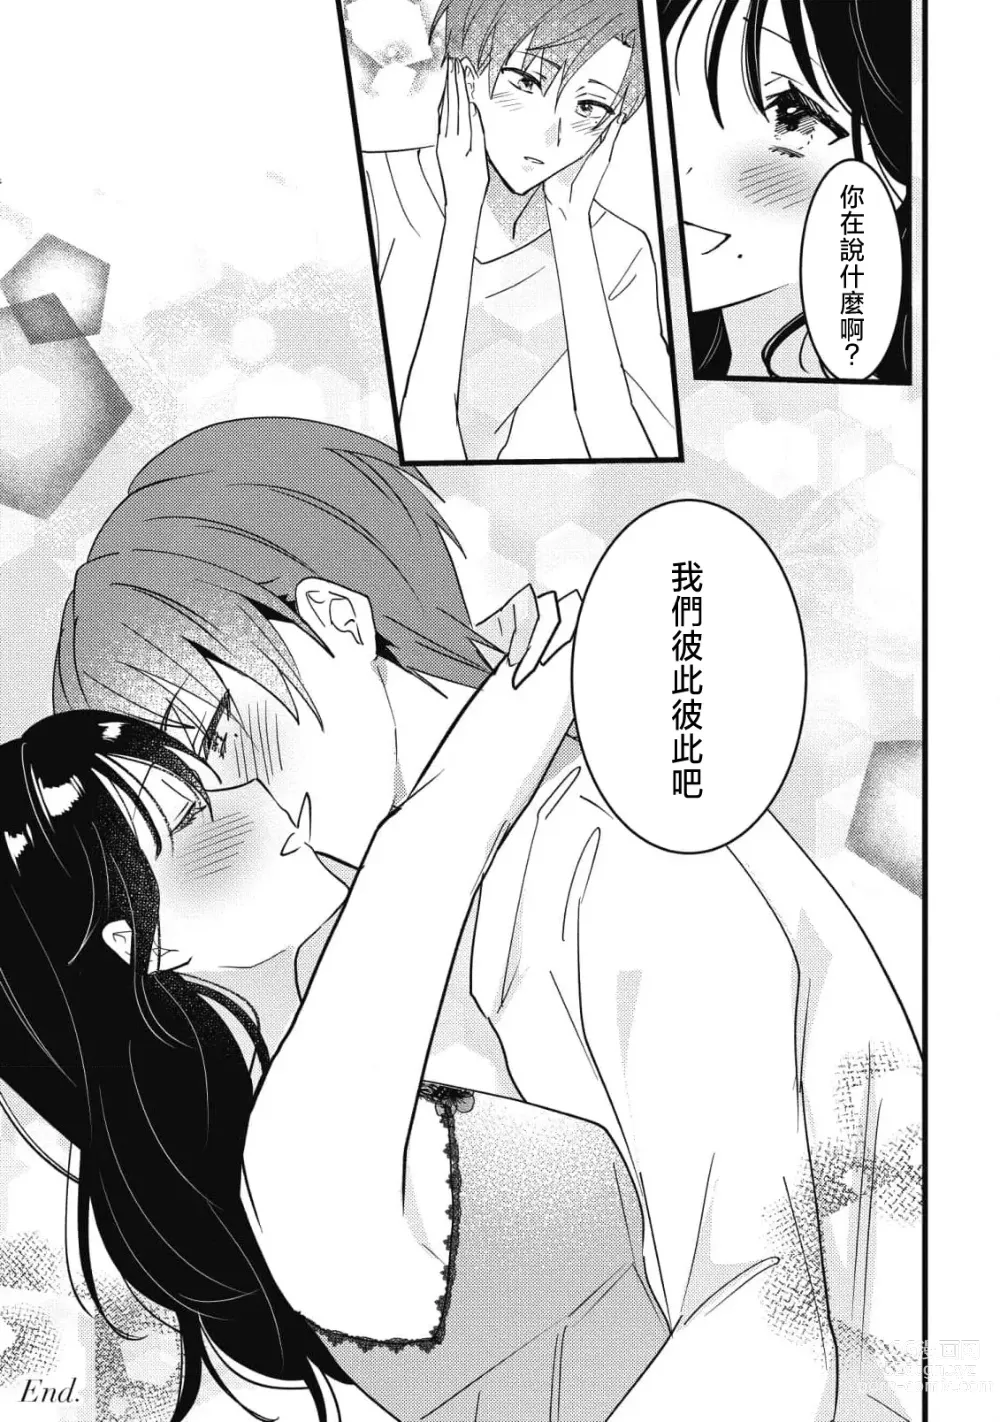 Page 151 of manga Dog or Teacher-放学后，老师们的调教恋爱- Class.1-5 end